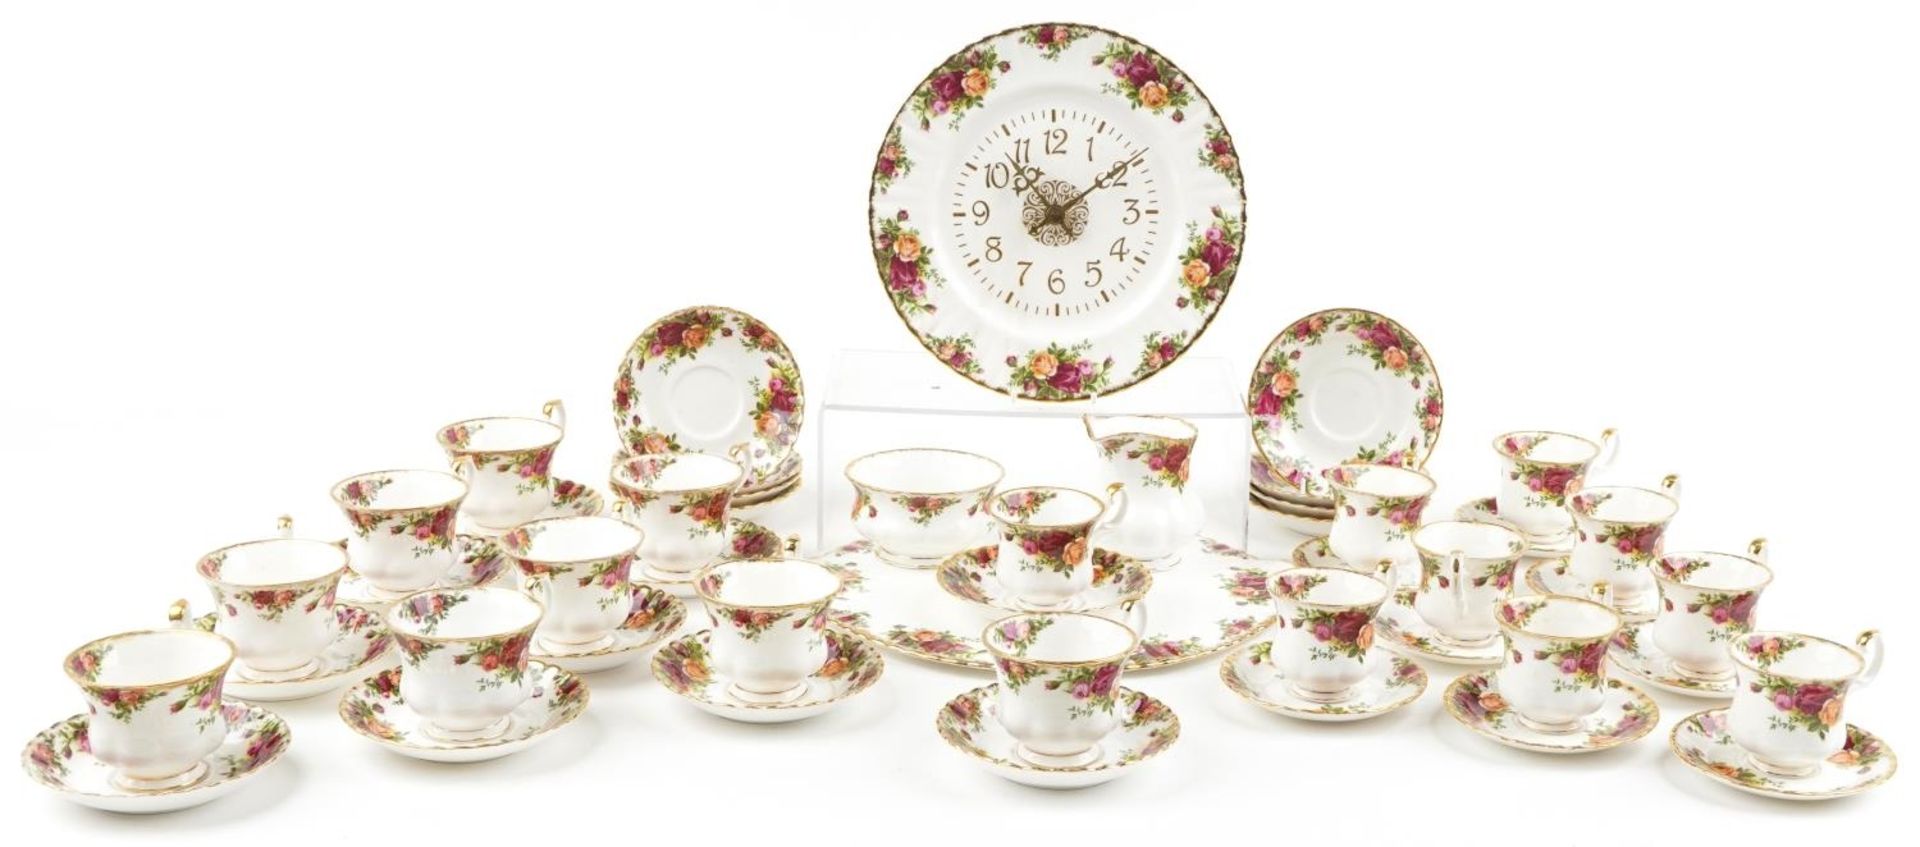 Royal Albert Old Country Roses china including various teaware, wall clock and cake tray, 35cm